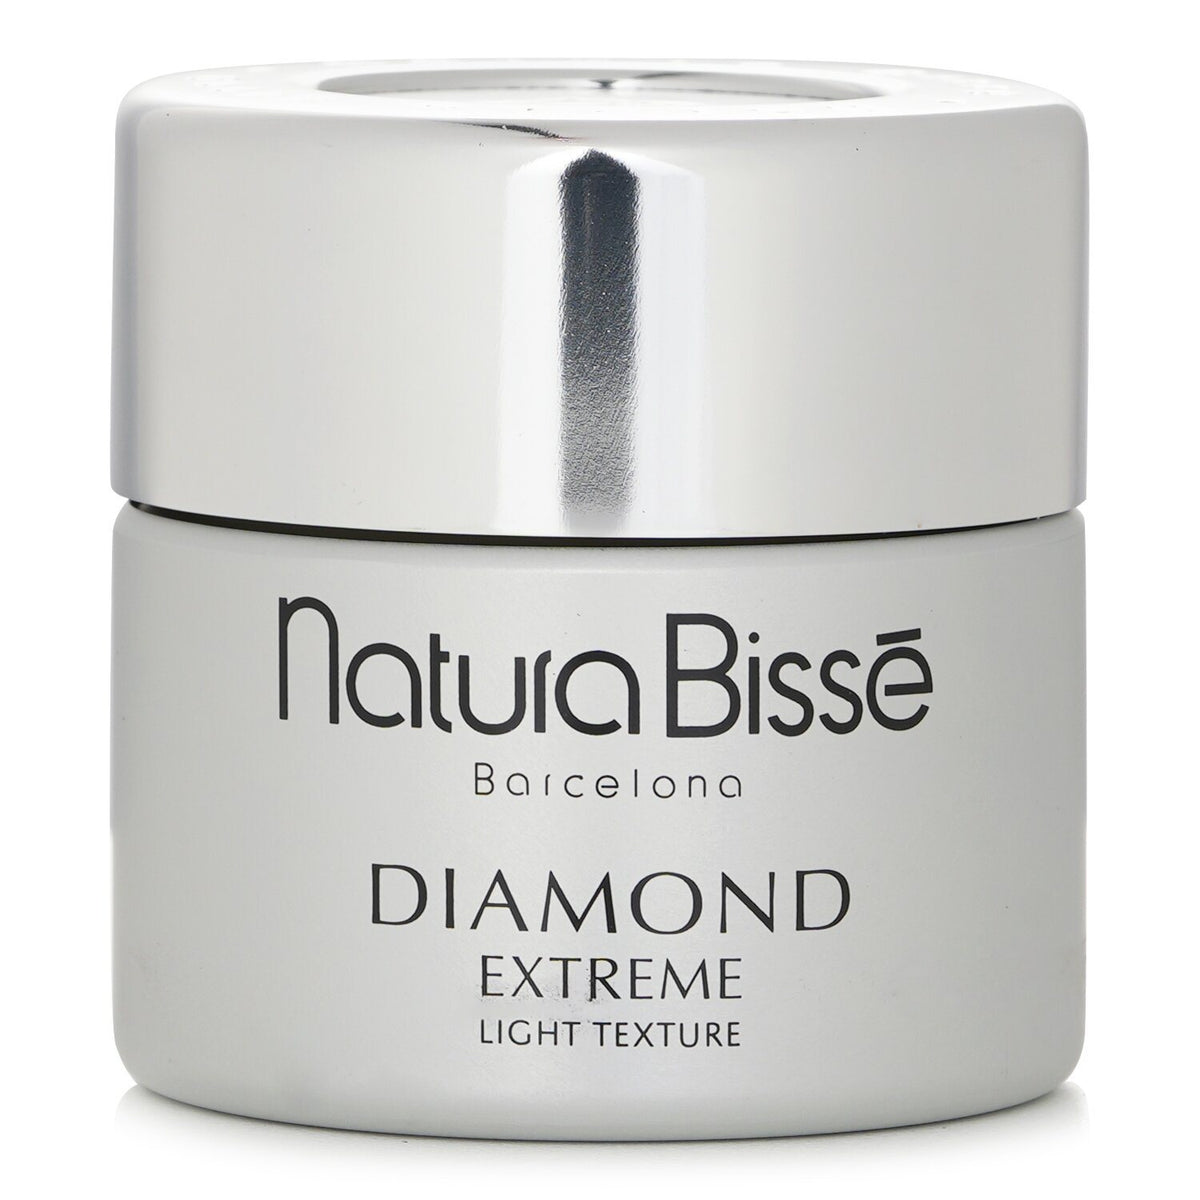 NATURA BISSE - Diamond Extreme Cream Light Texture 503163 50ml/1.7oz - Premium Moisturizer from Doba - Just $395.51! Shop now at Ida Louise Boutique